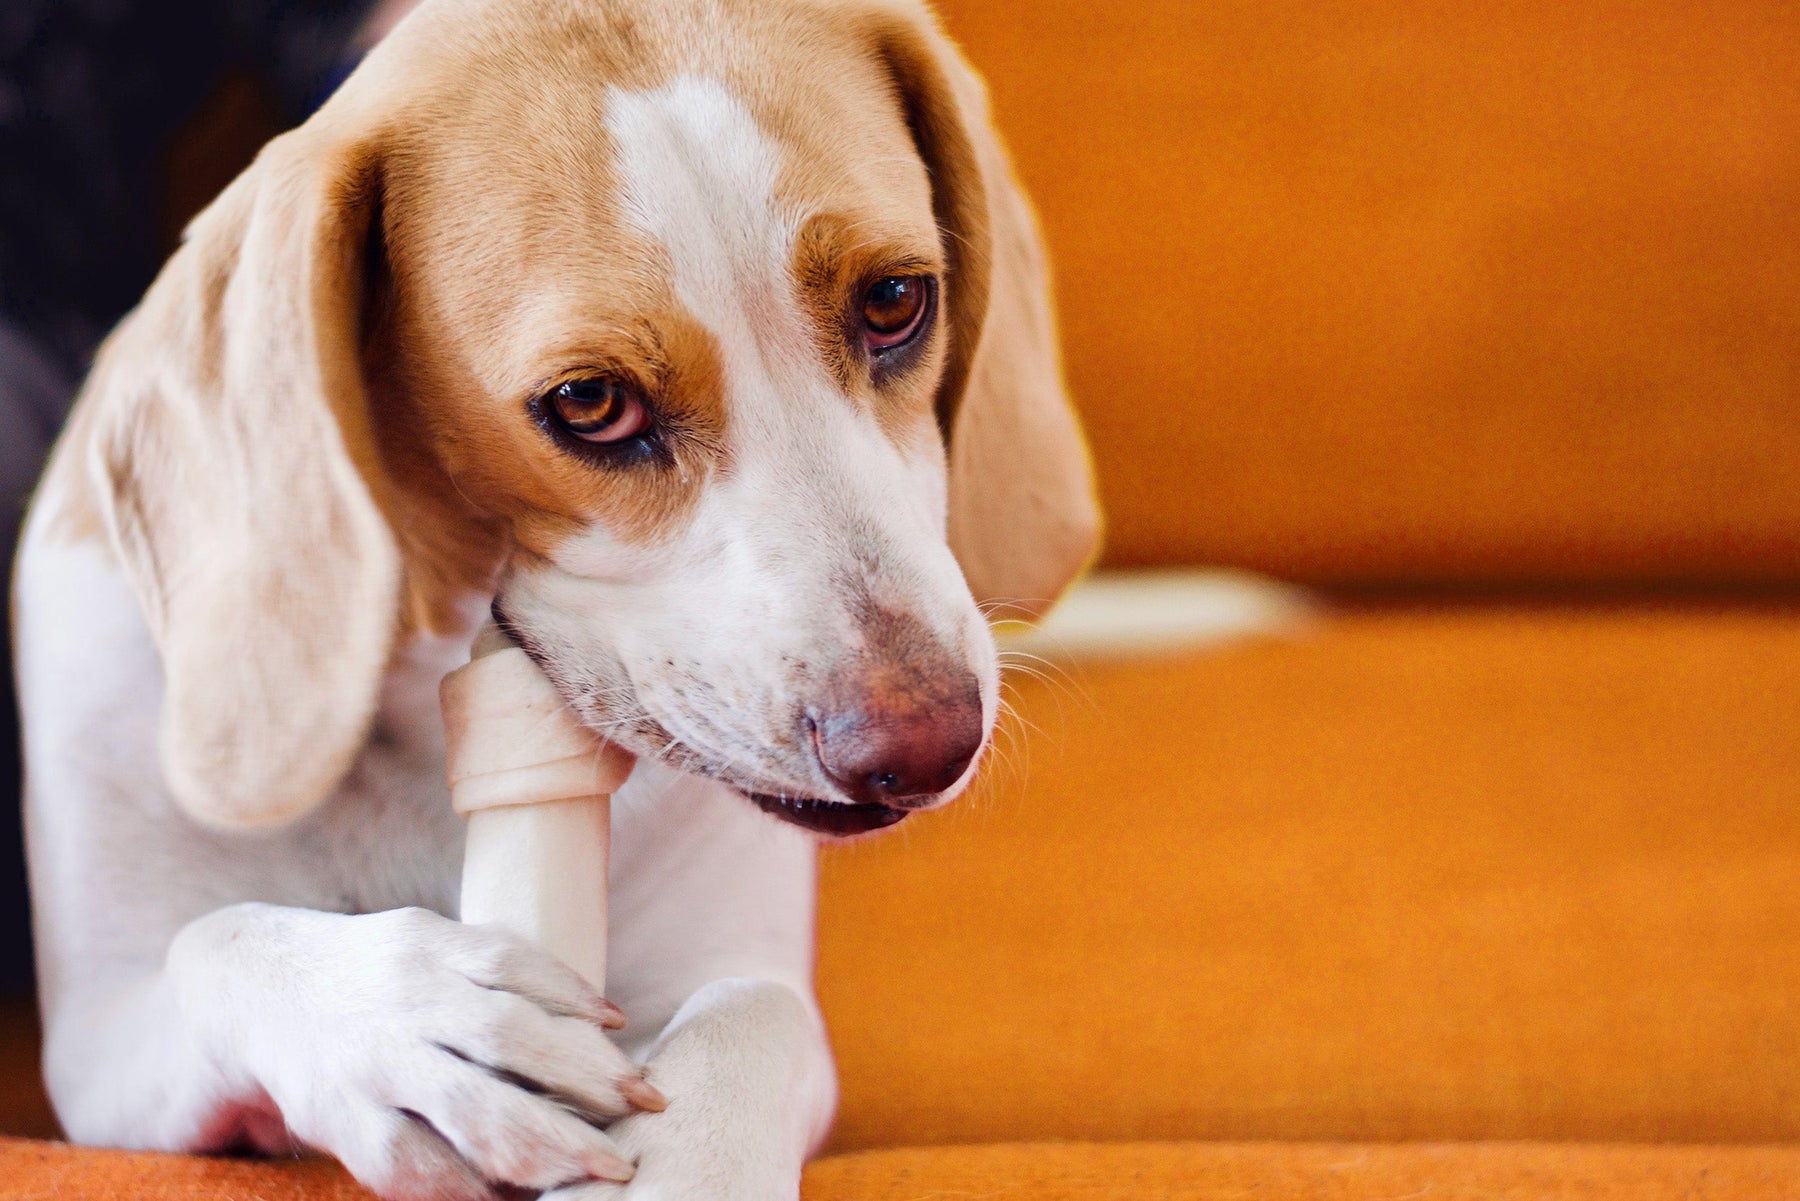 A beagle chewing on a rawhide bone chew